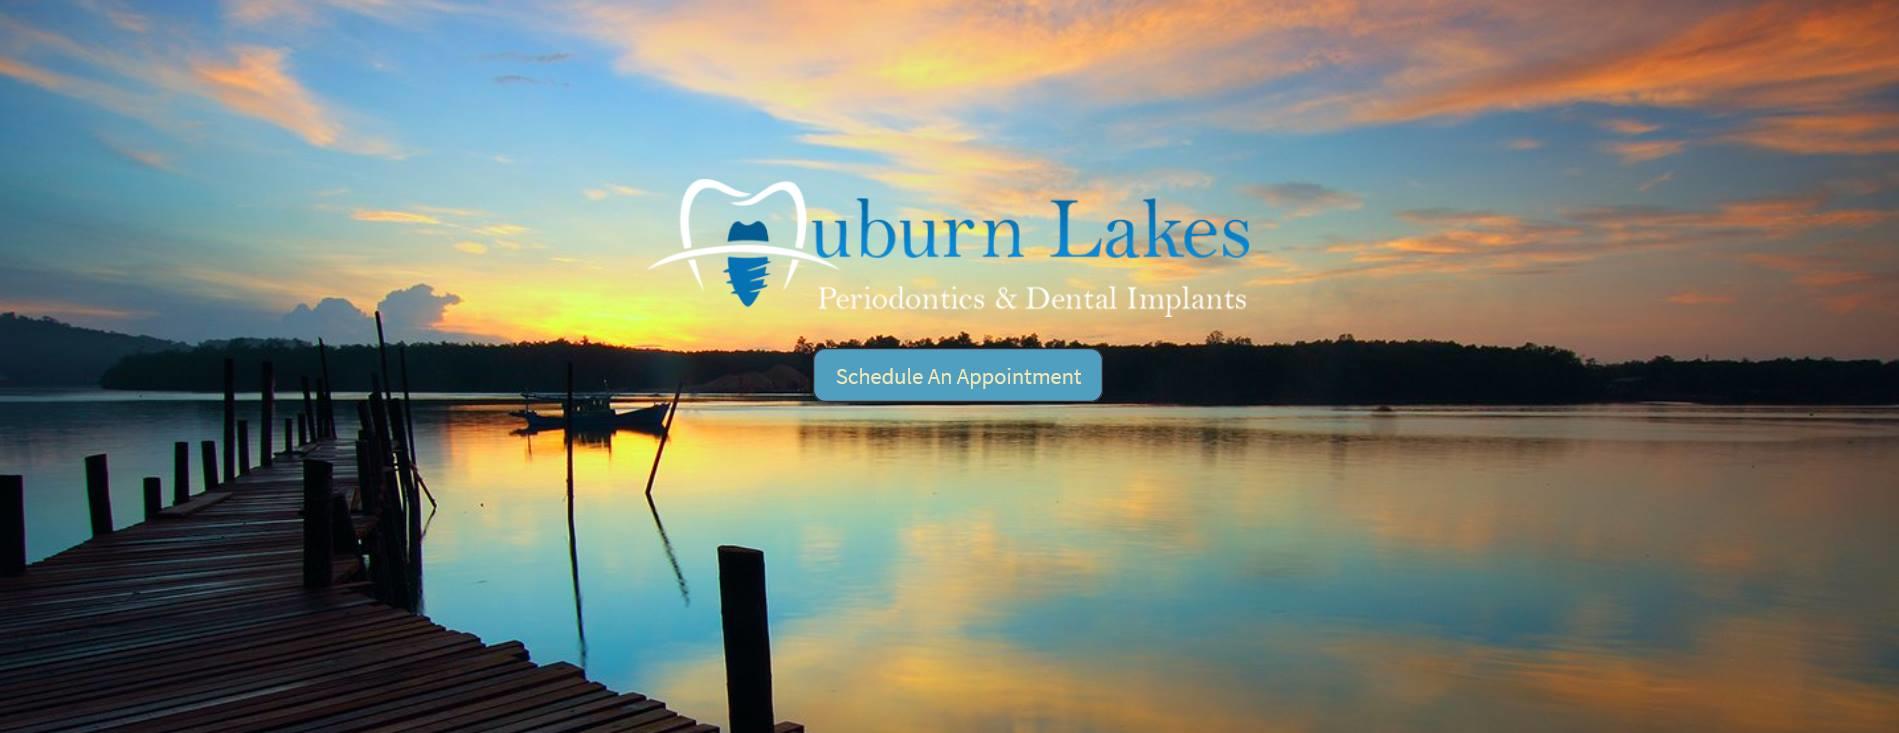 Auburn Lakes Periodontics & Dental Implants Photo